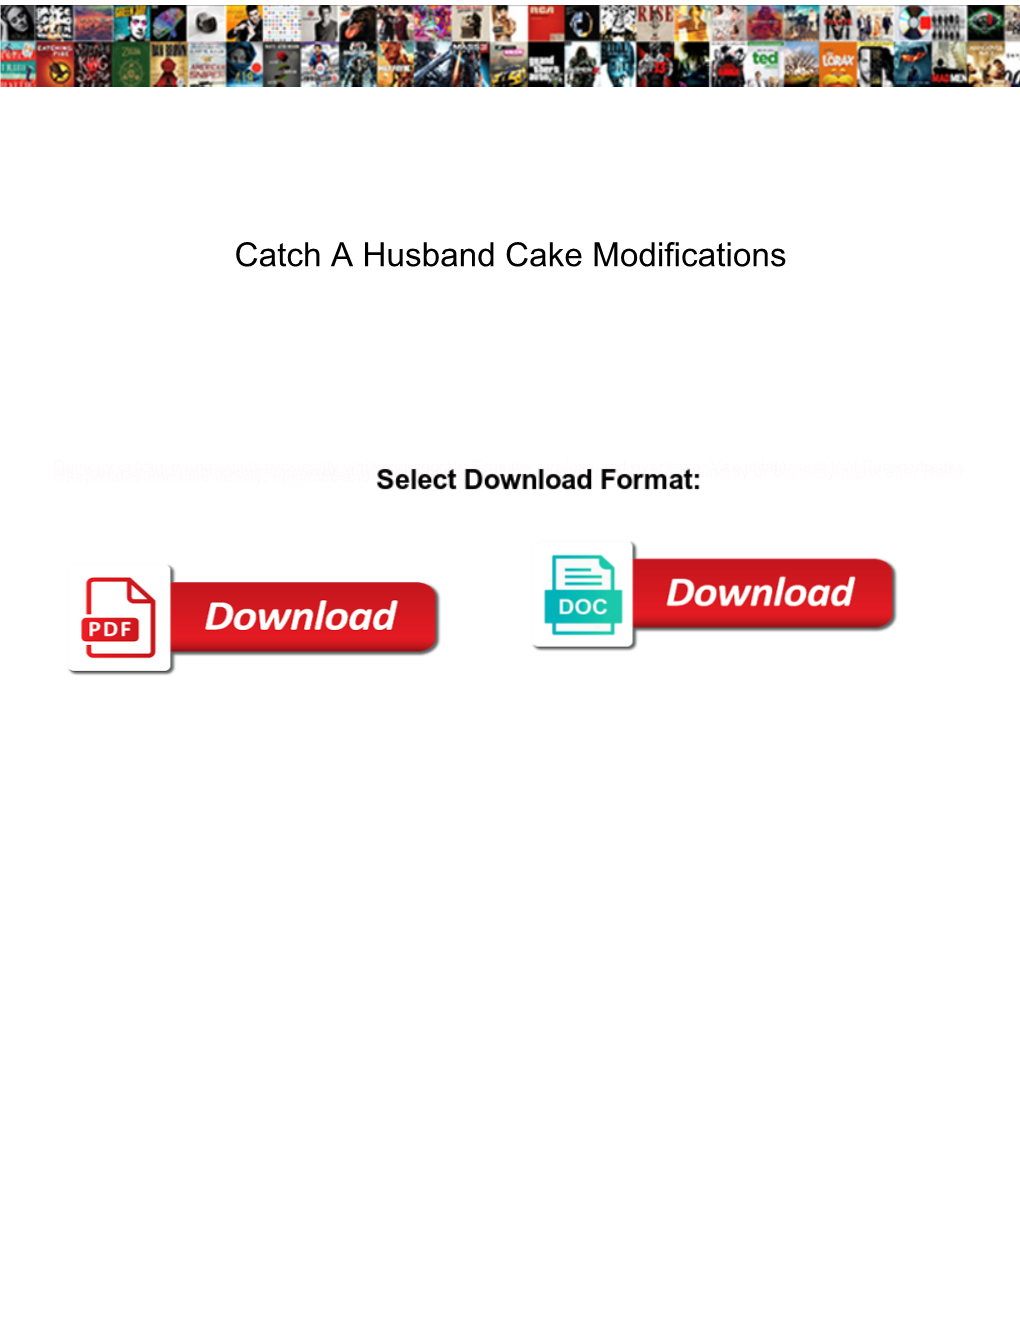 Catch a Husband Cake Modifications